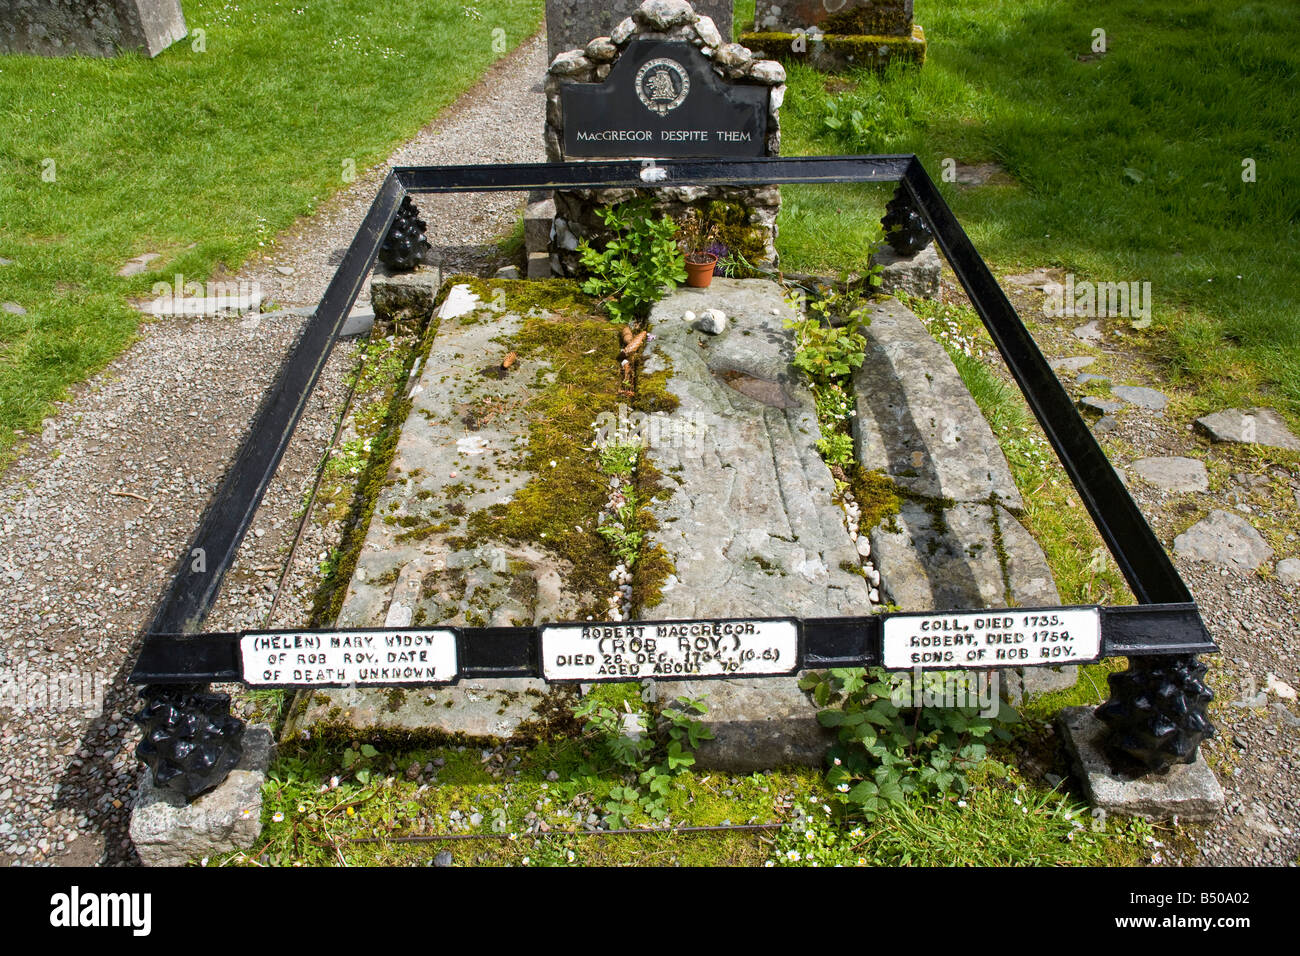 Rob roys grave in Scotland Stock Photo